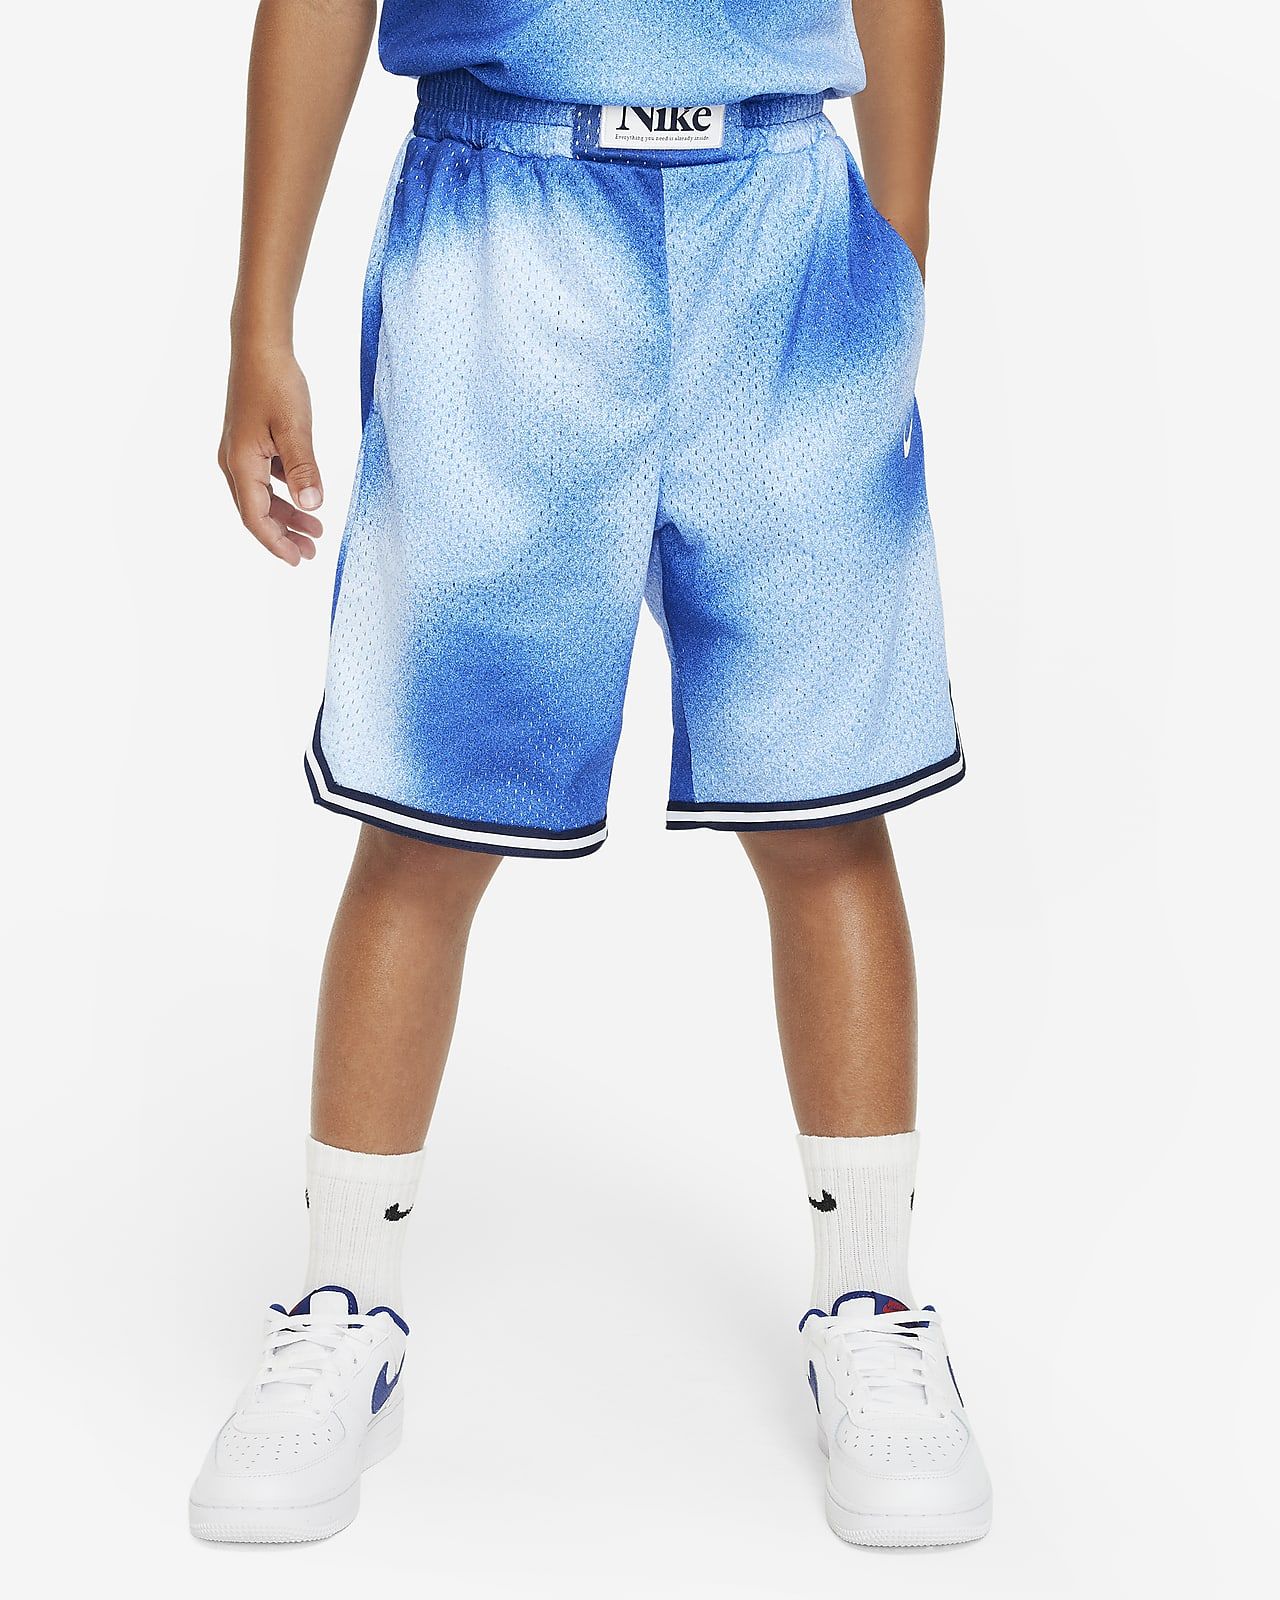 Nike Culture of Basketball Printed Shorts Little Kids Shorts. Nike.com | Nike (US)